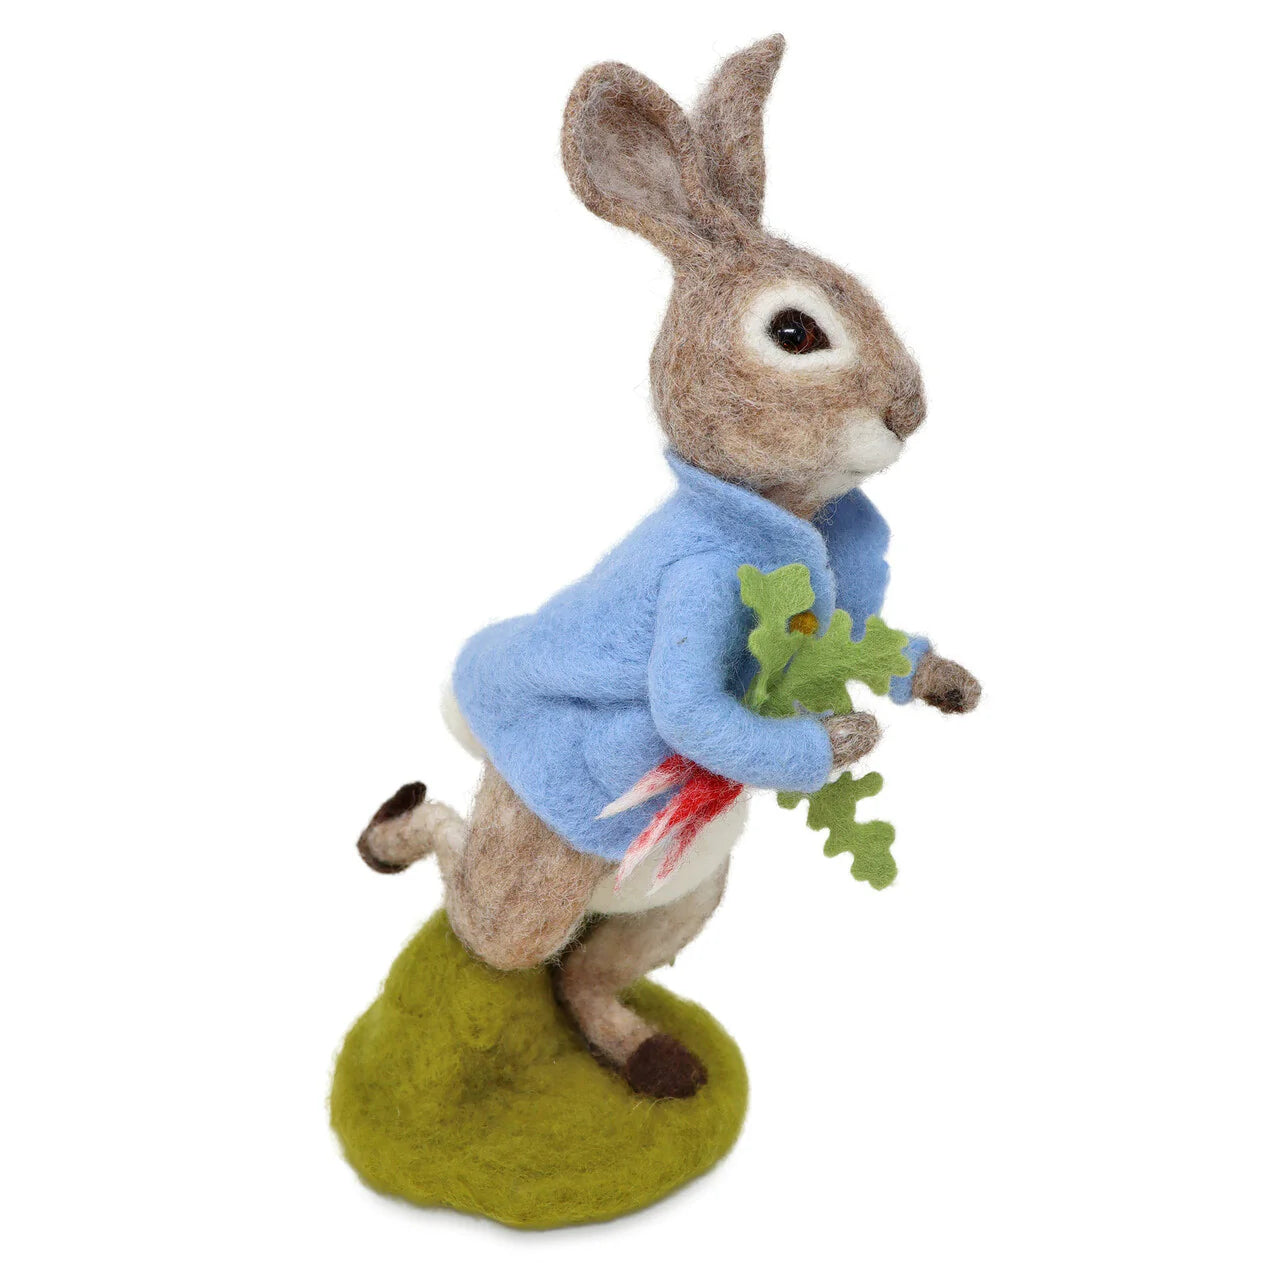 Crafty Kit Company Beatrix Potter Peter Rabbit and the Stolen Radishes felting kit